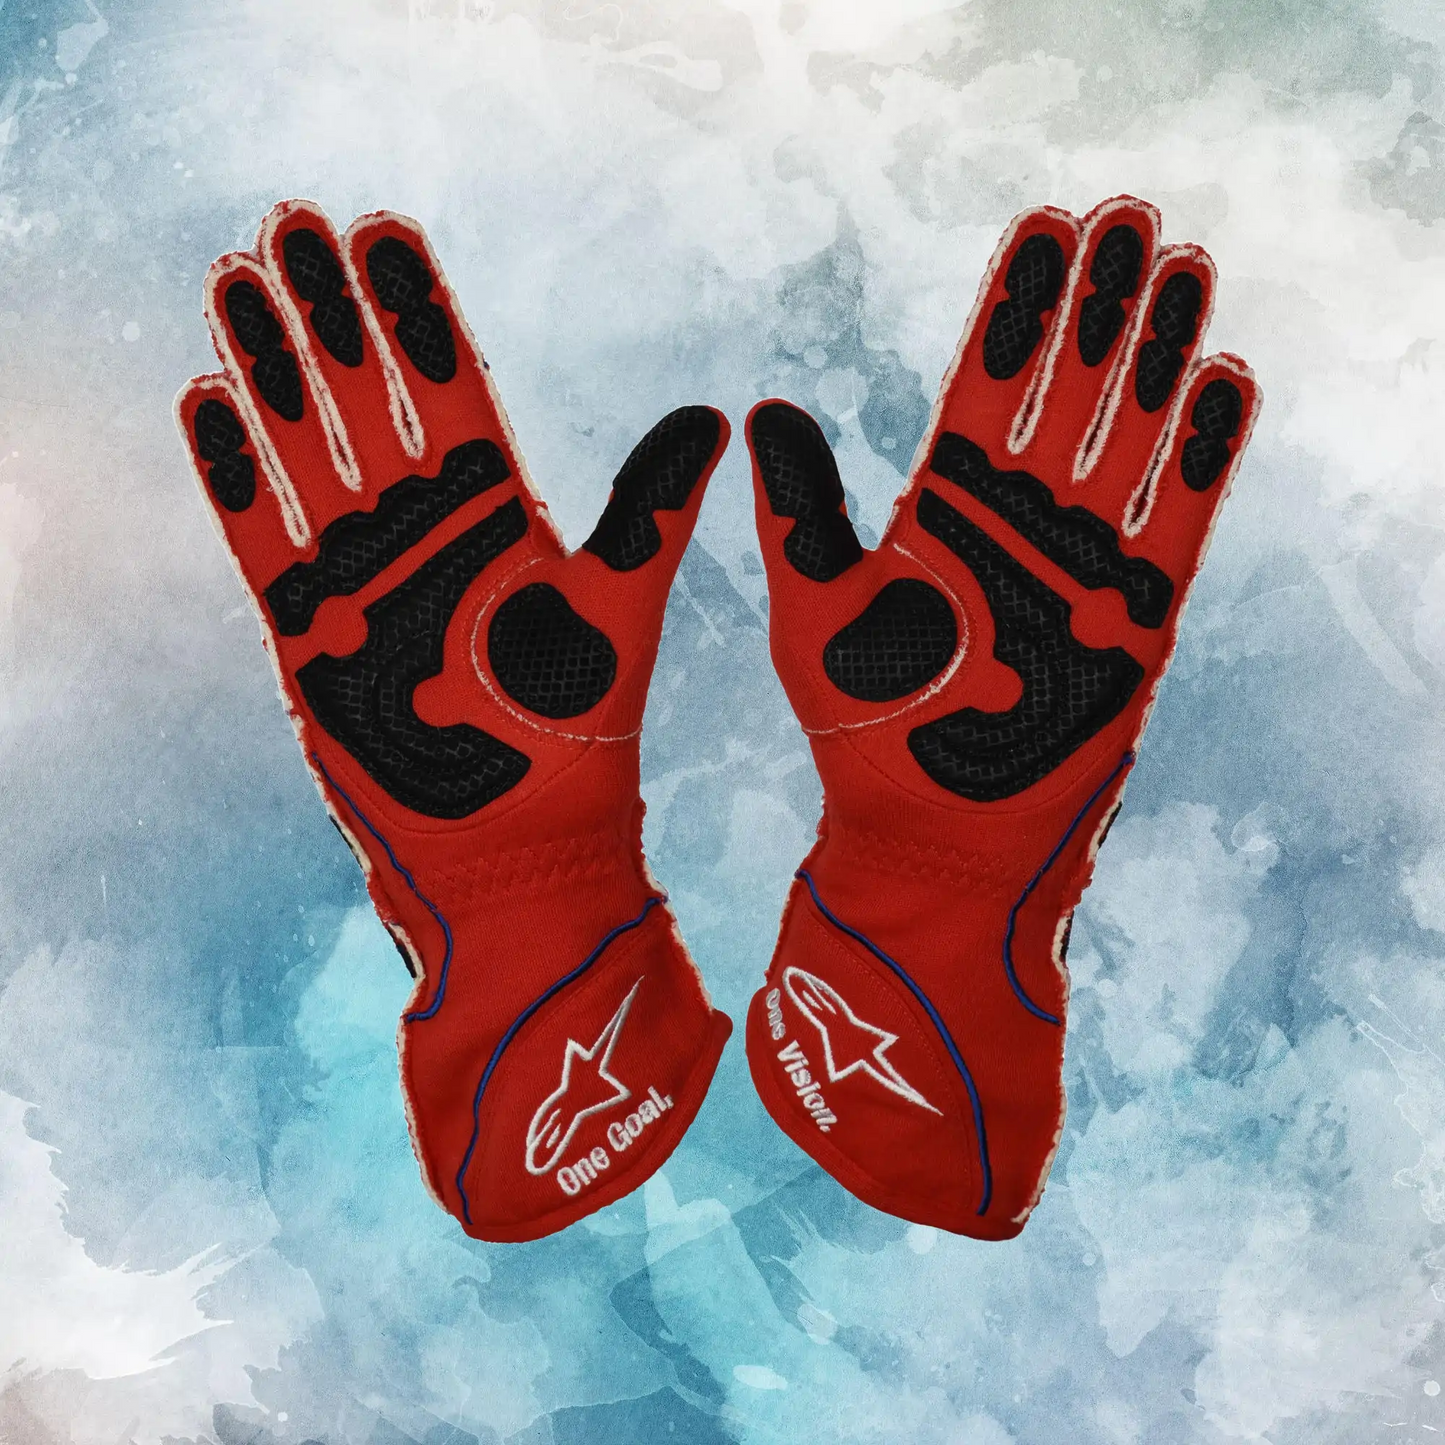 2008 Danica Patrick Original Alpinestars IndyCar Gloves / Danica Patrick Replica Race Gloves